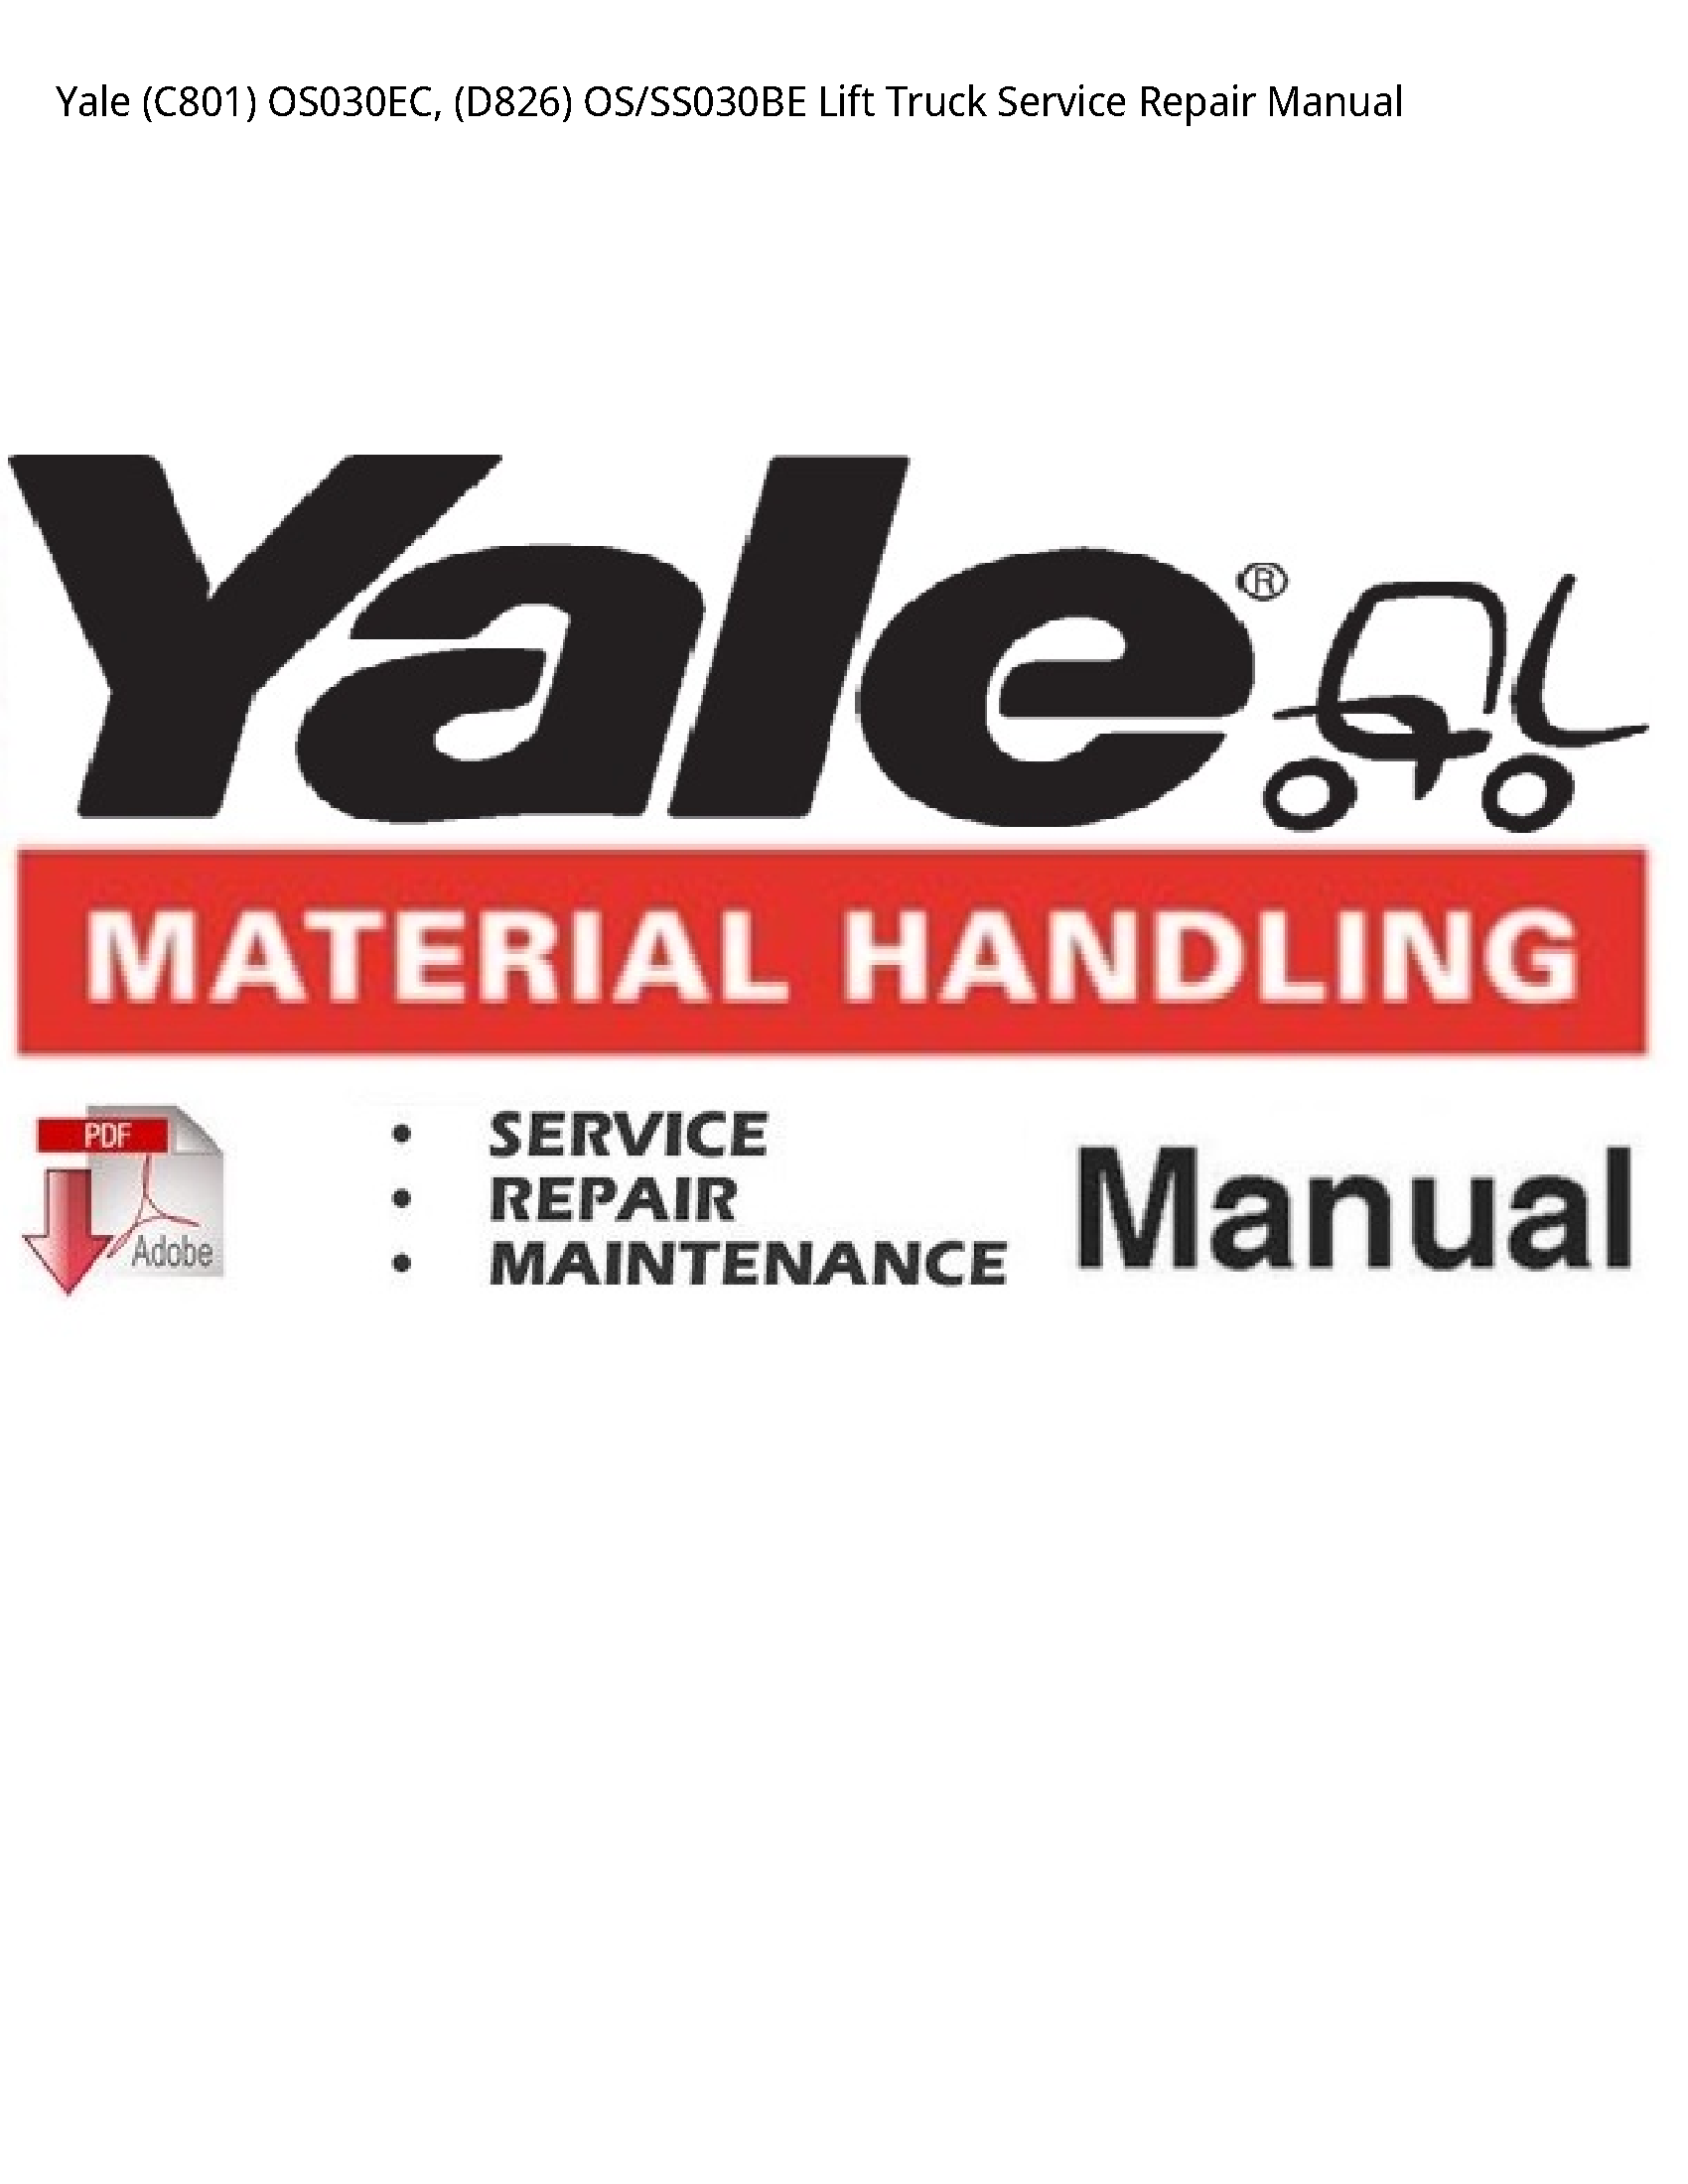 Yale (C801) Lift Truck manual